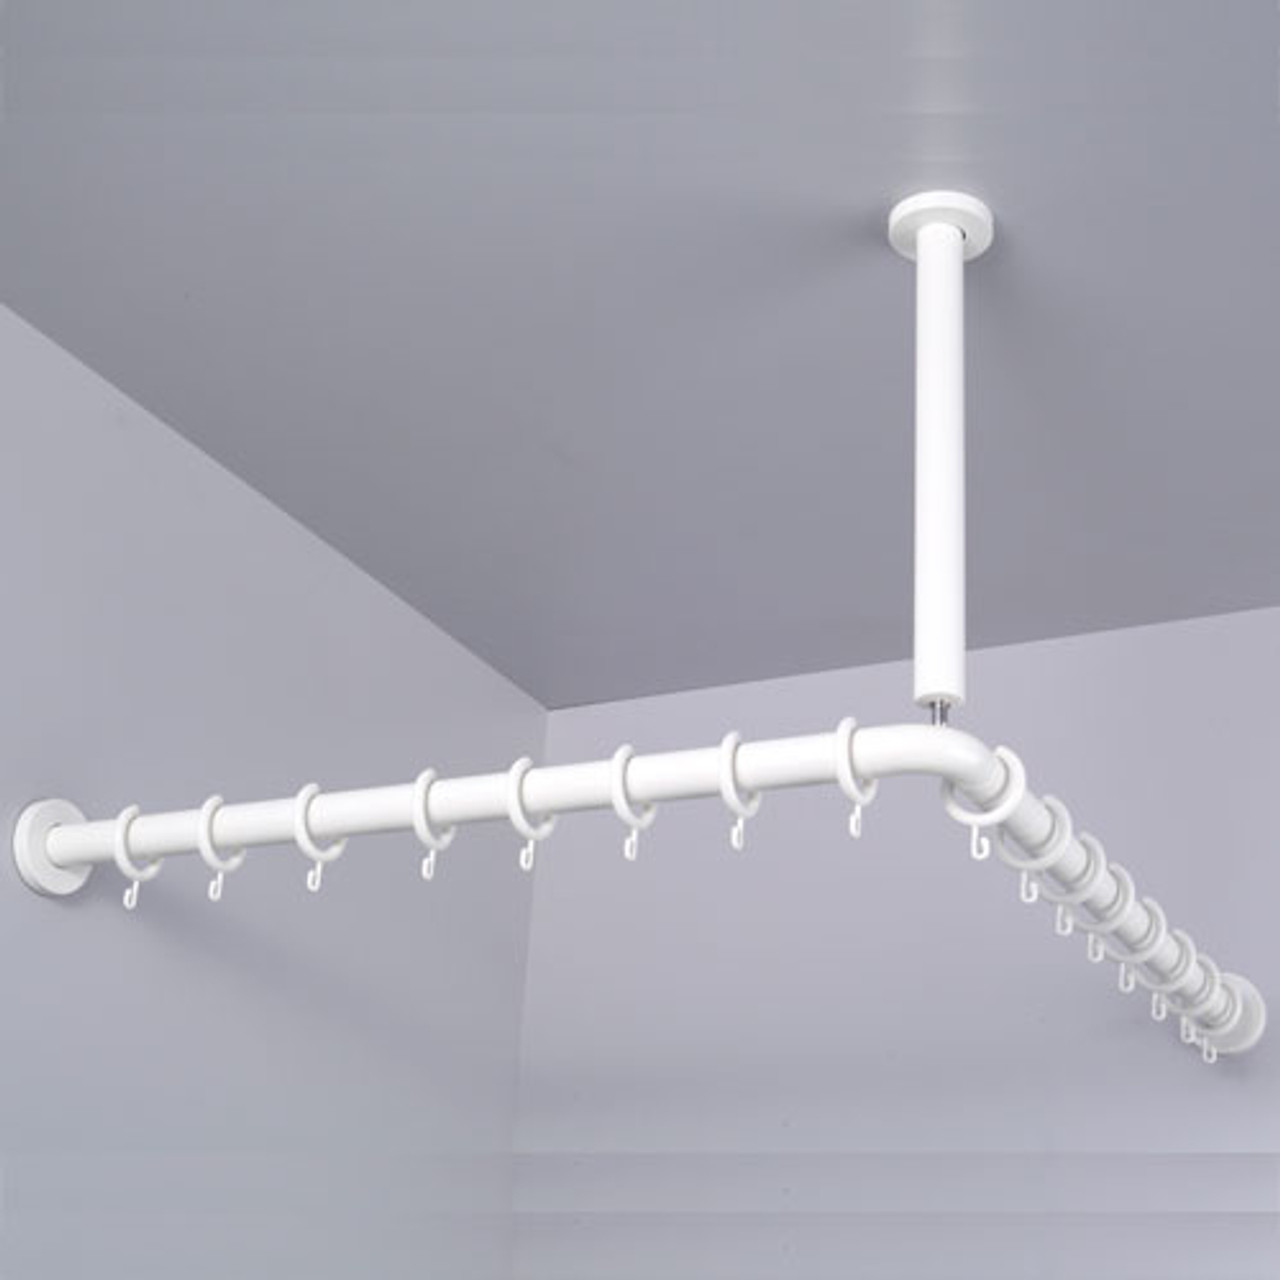 Pba Nylon Corner Shower Curtain Rod With Ceiling Support Harbor